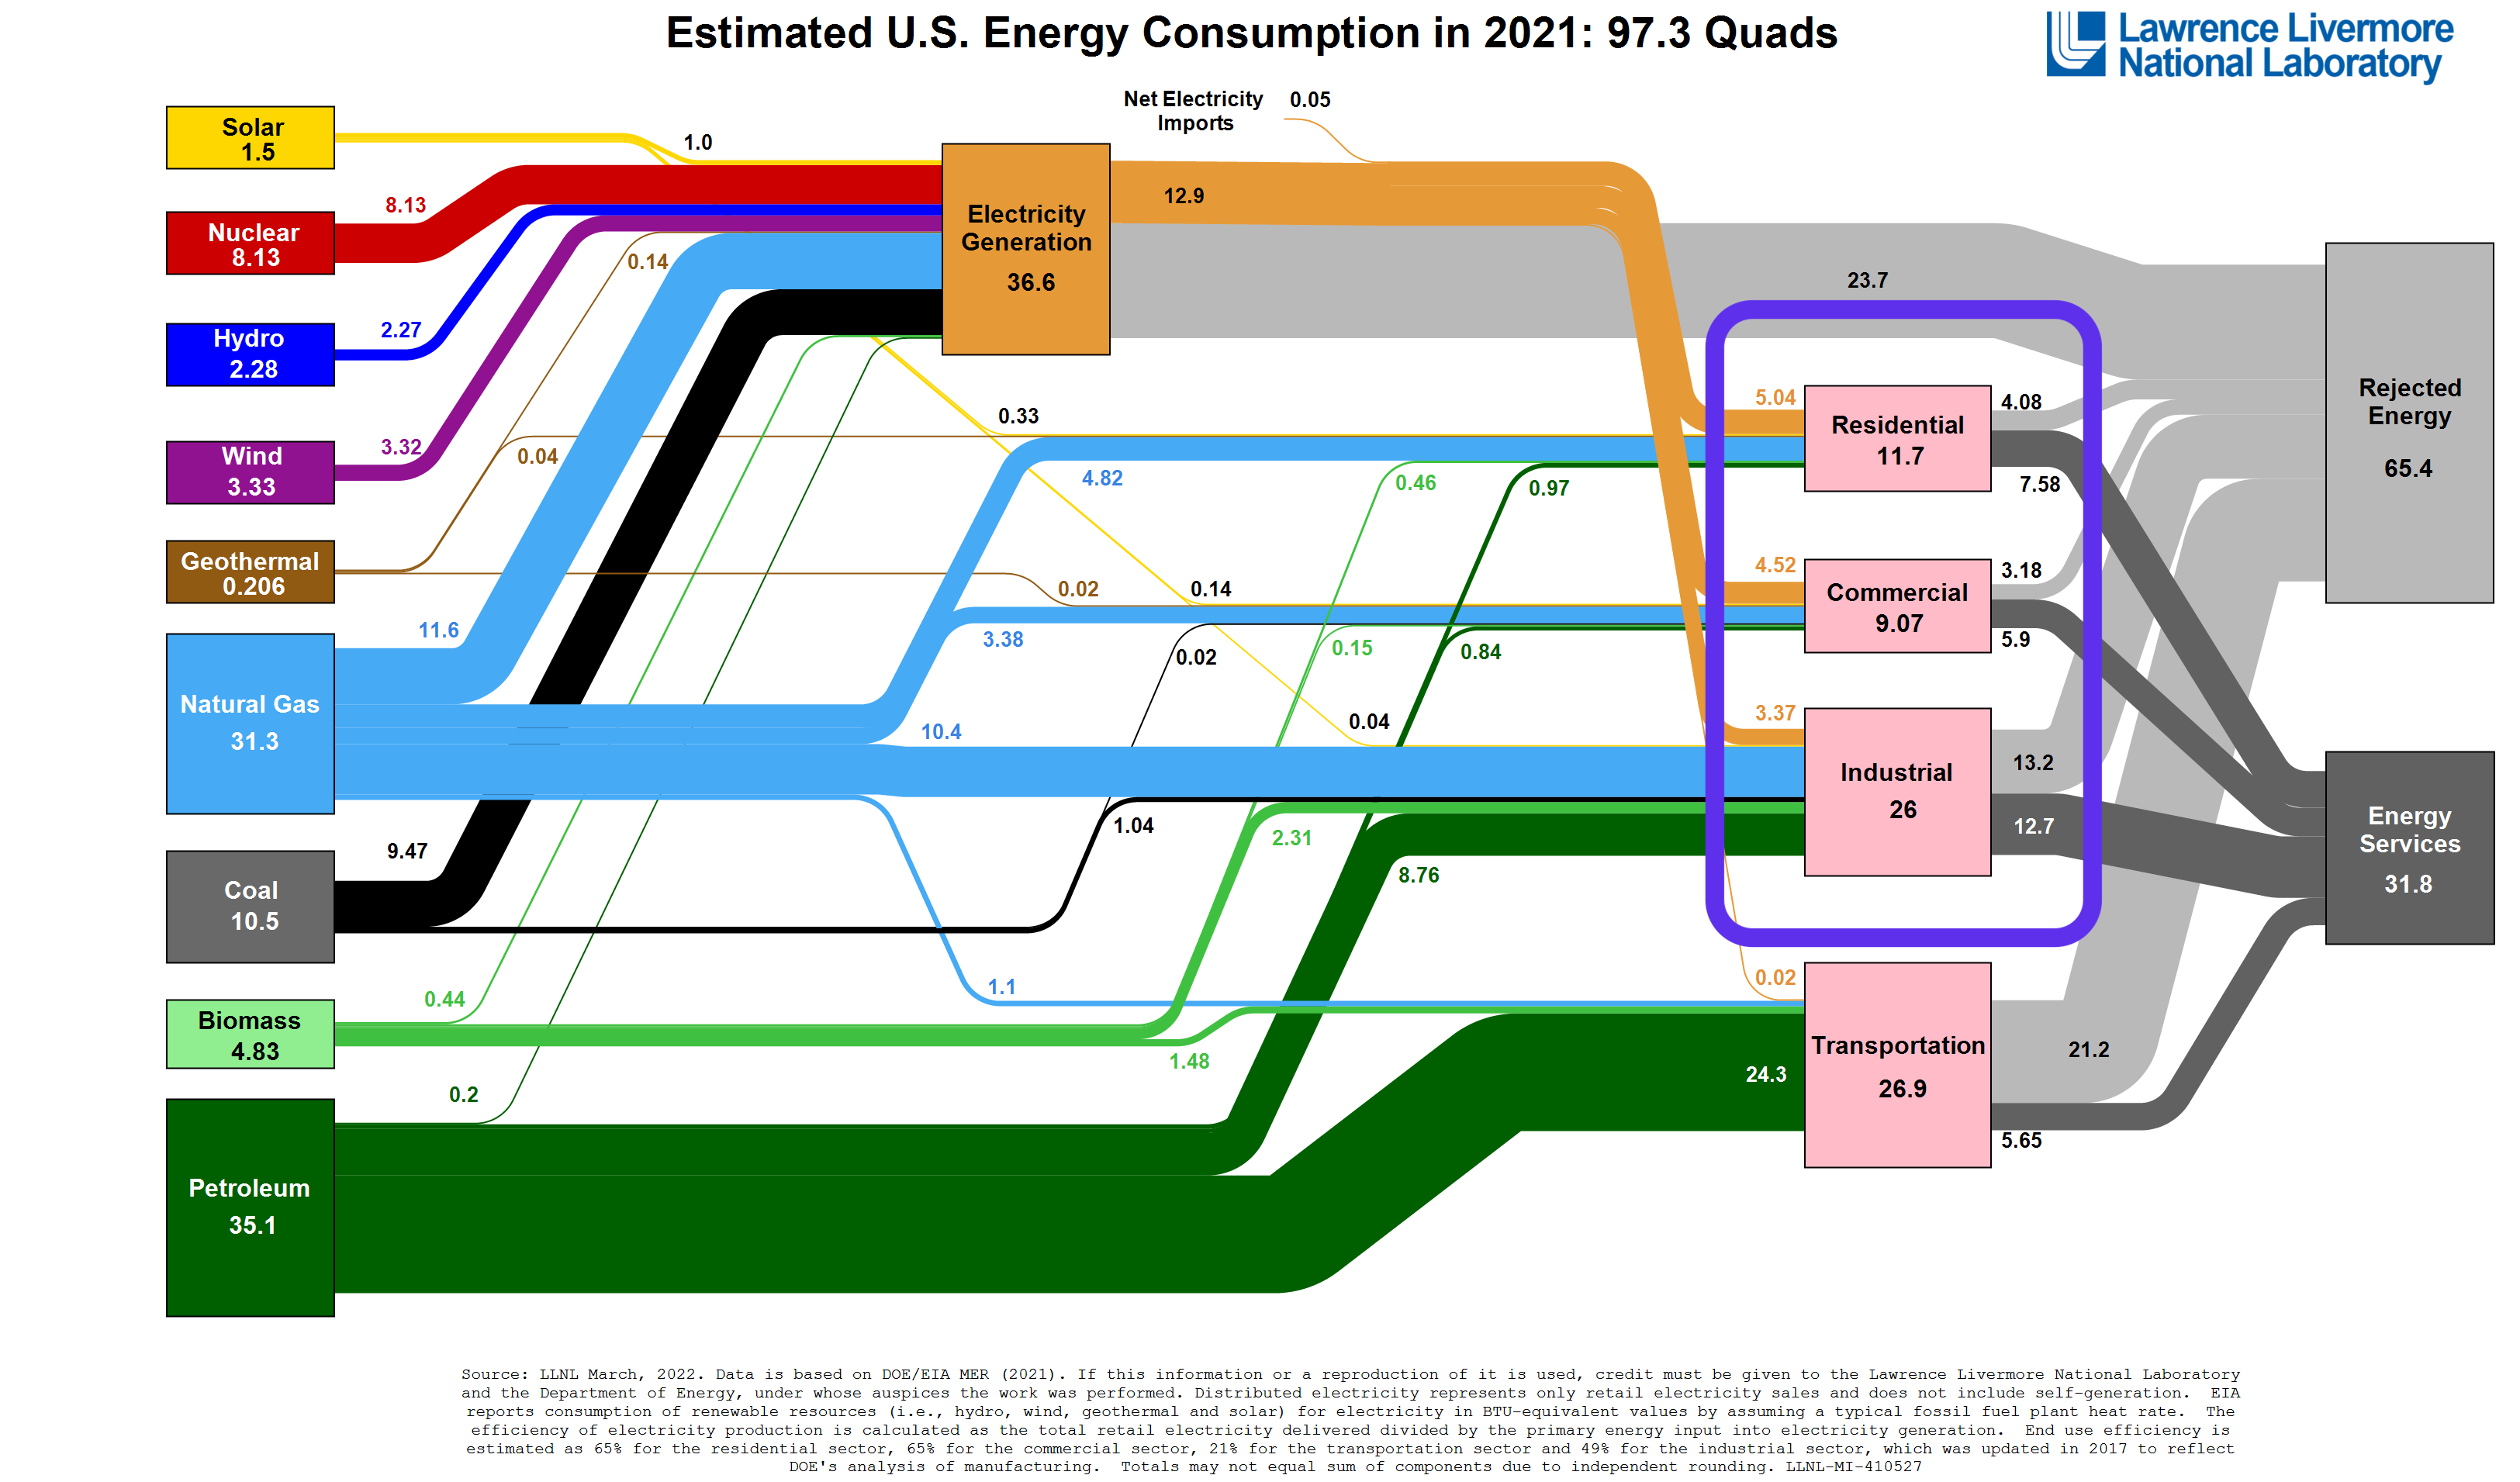 LLNL US Energy Flow Diagram for 2021 highlighting key energy services